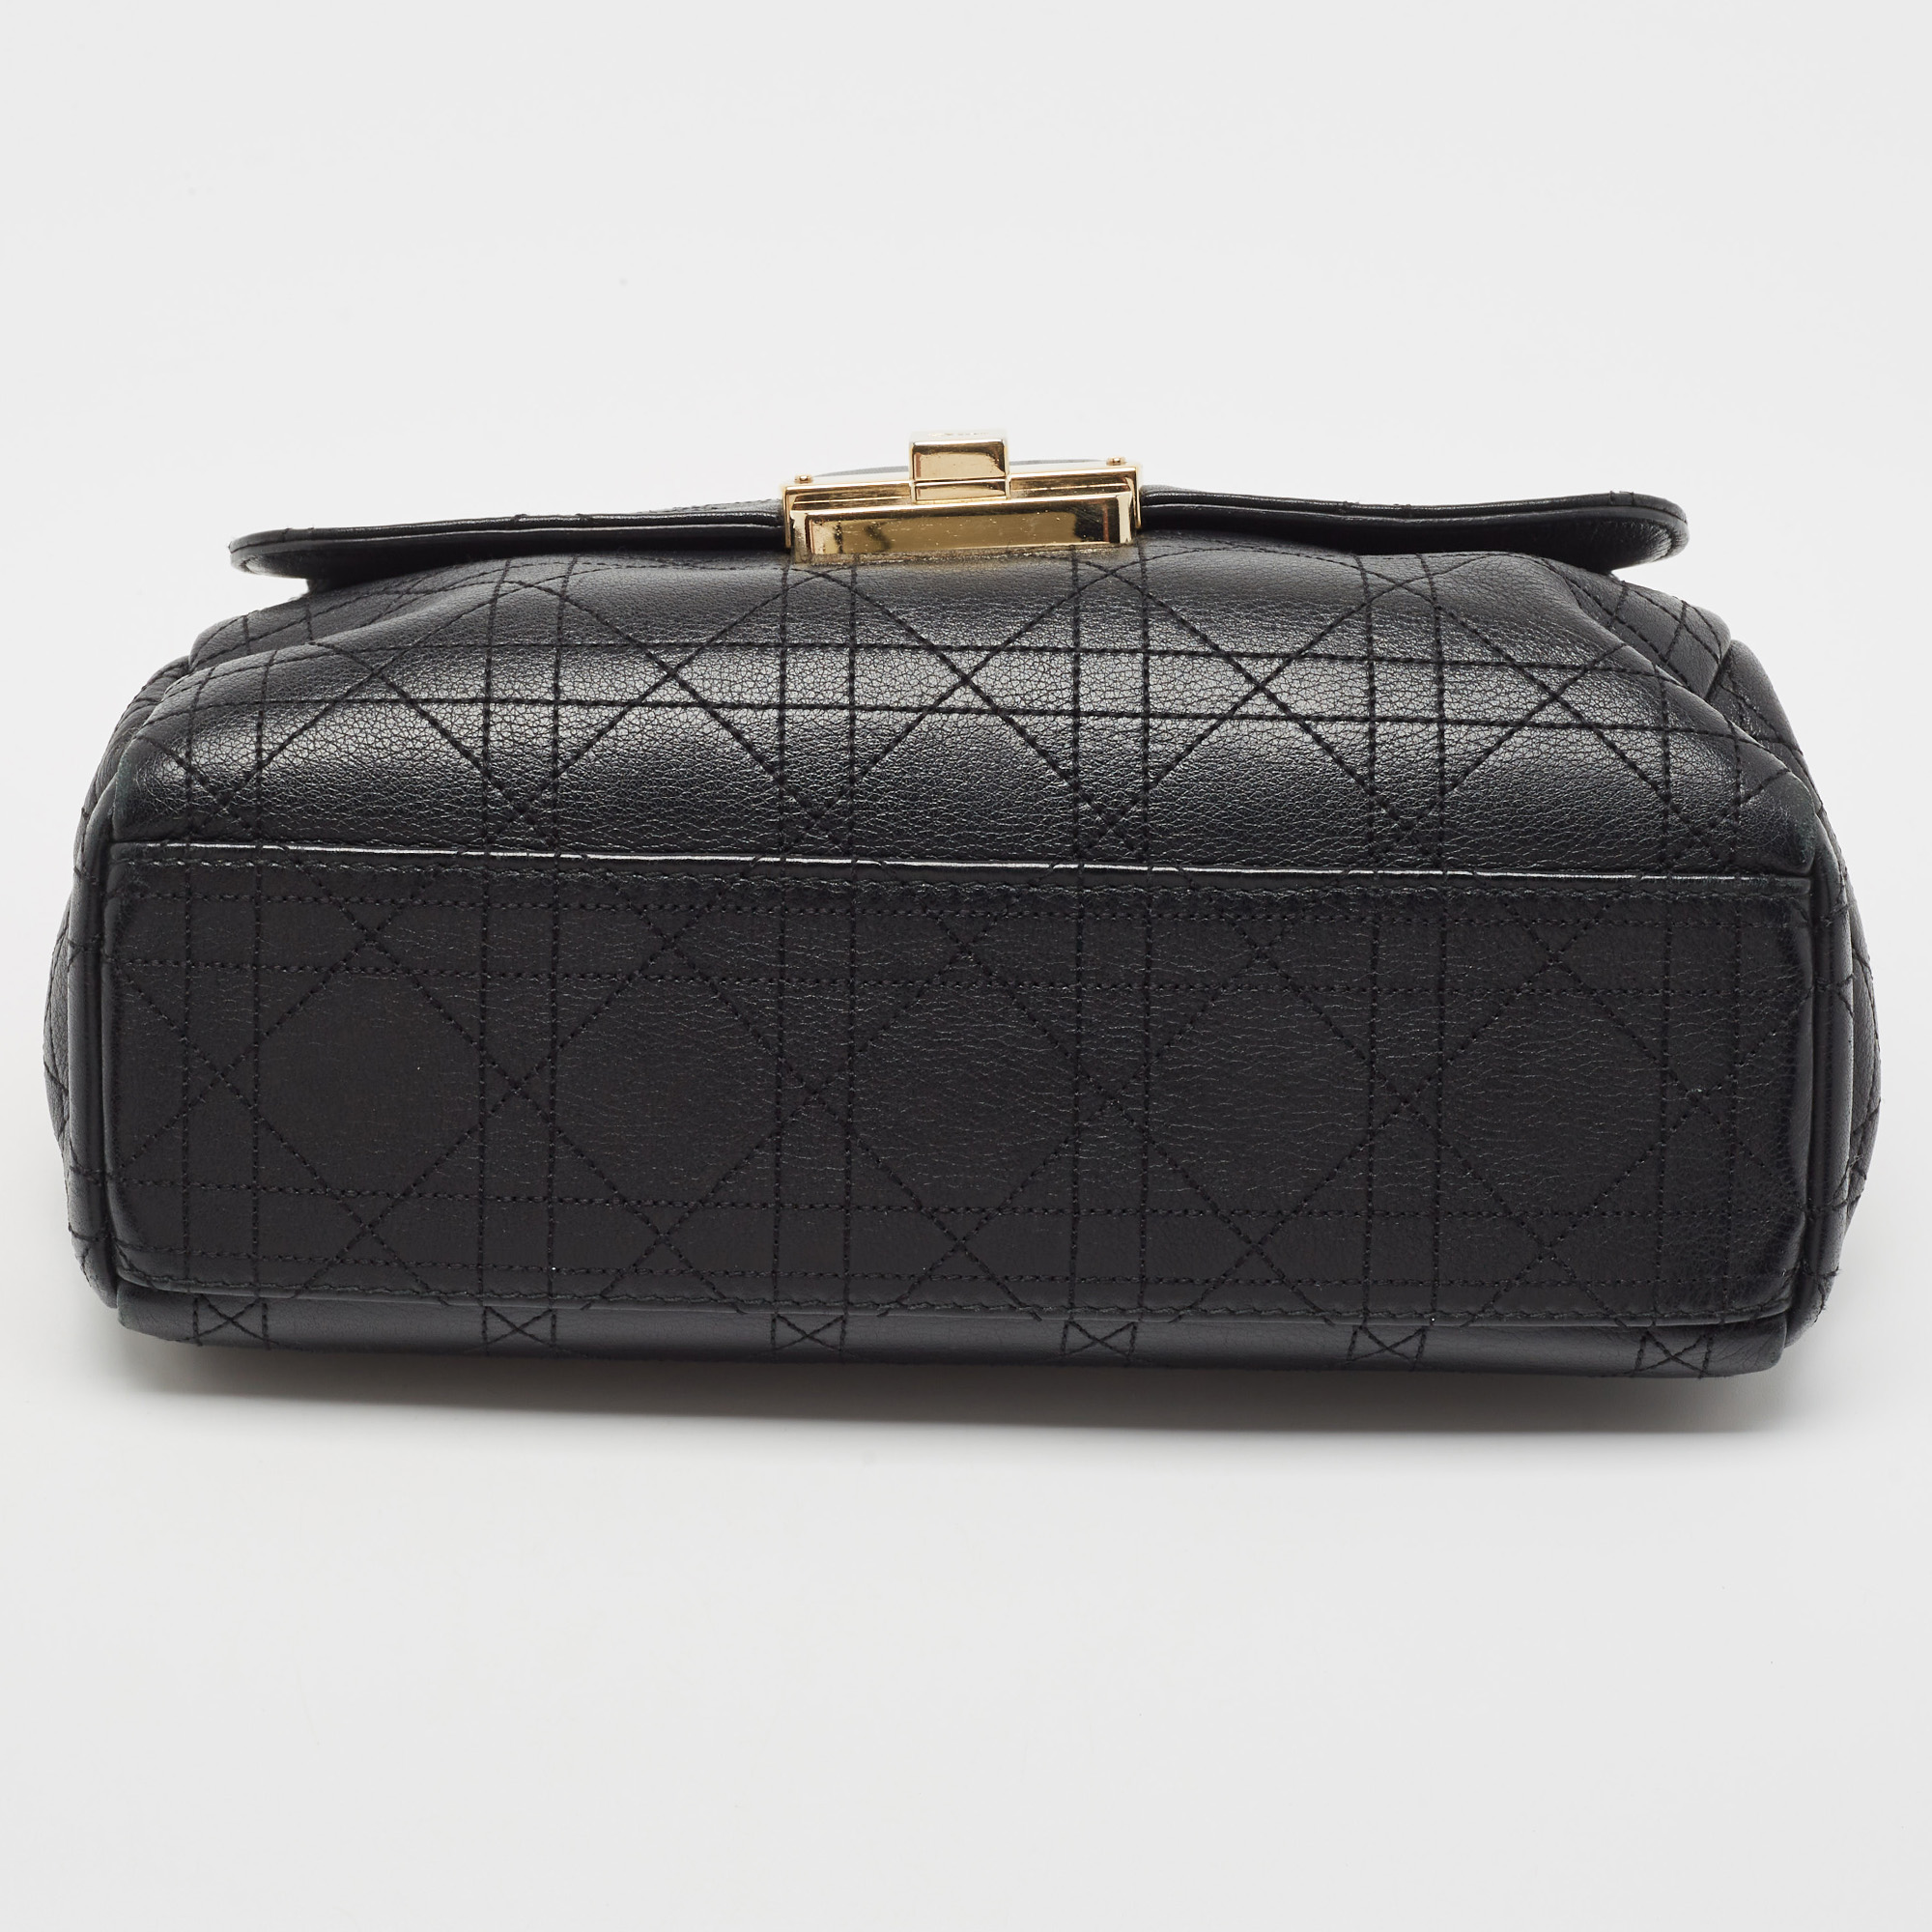 Dior Black Cannage Leather Small Diorling Shoulder Bag